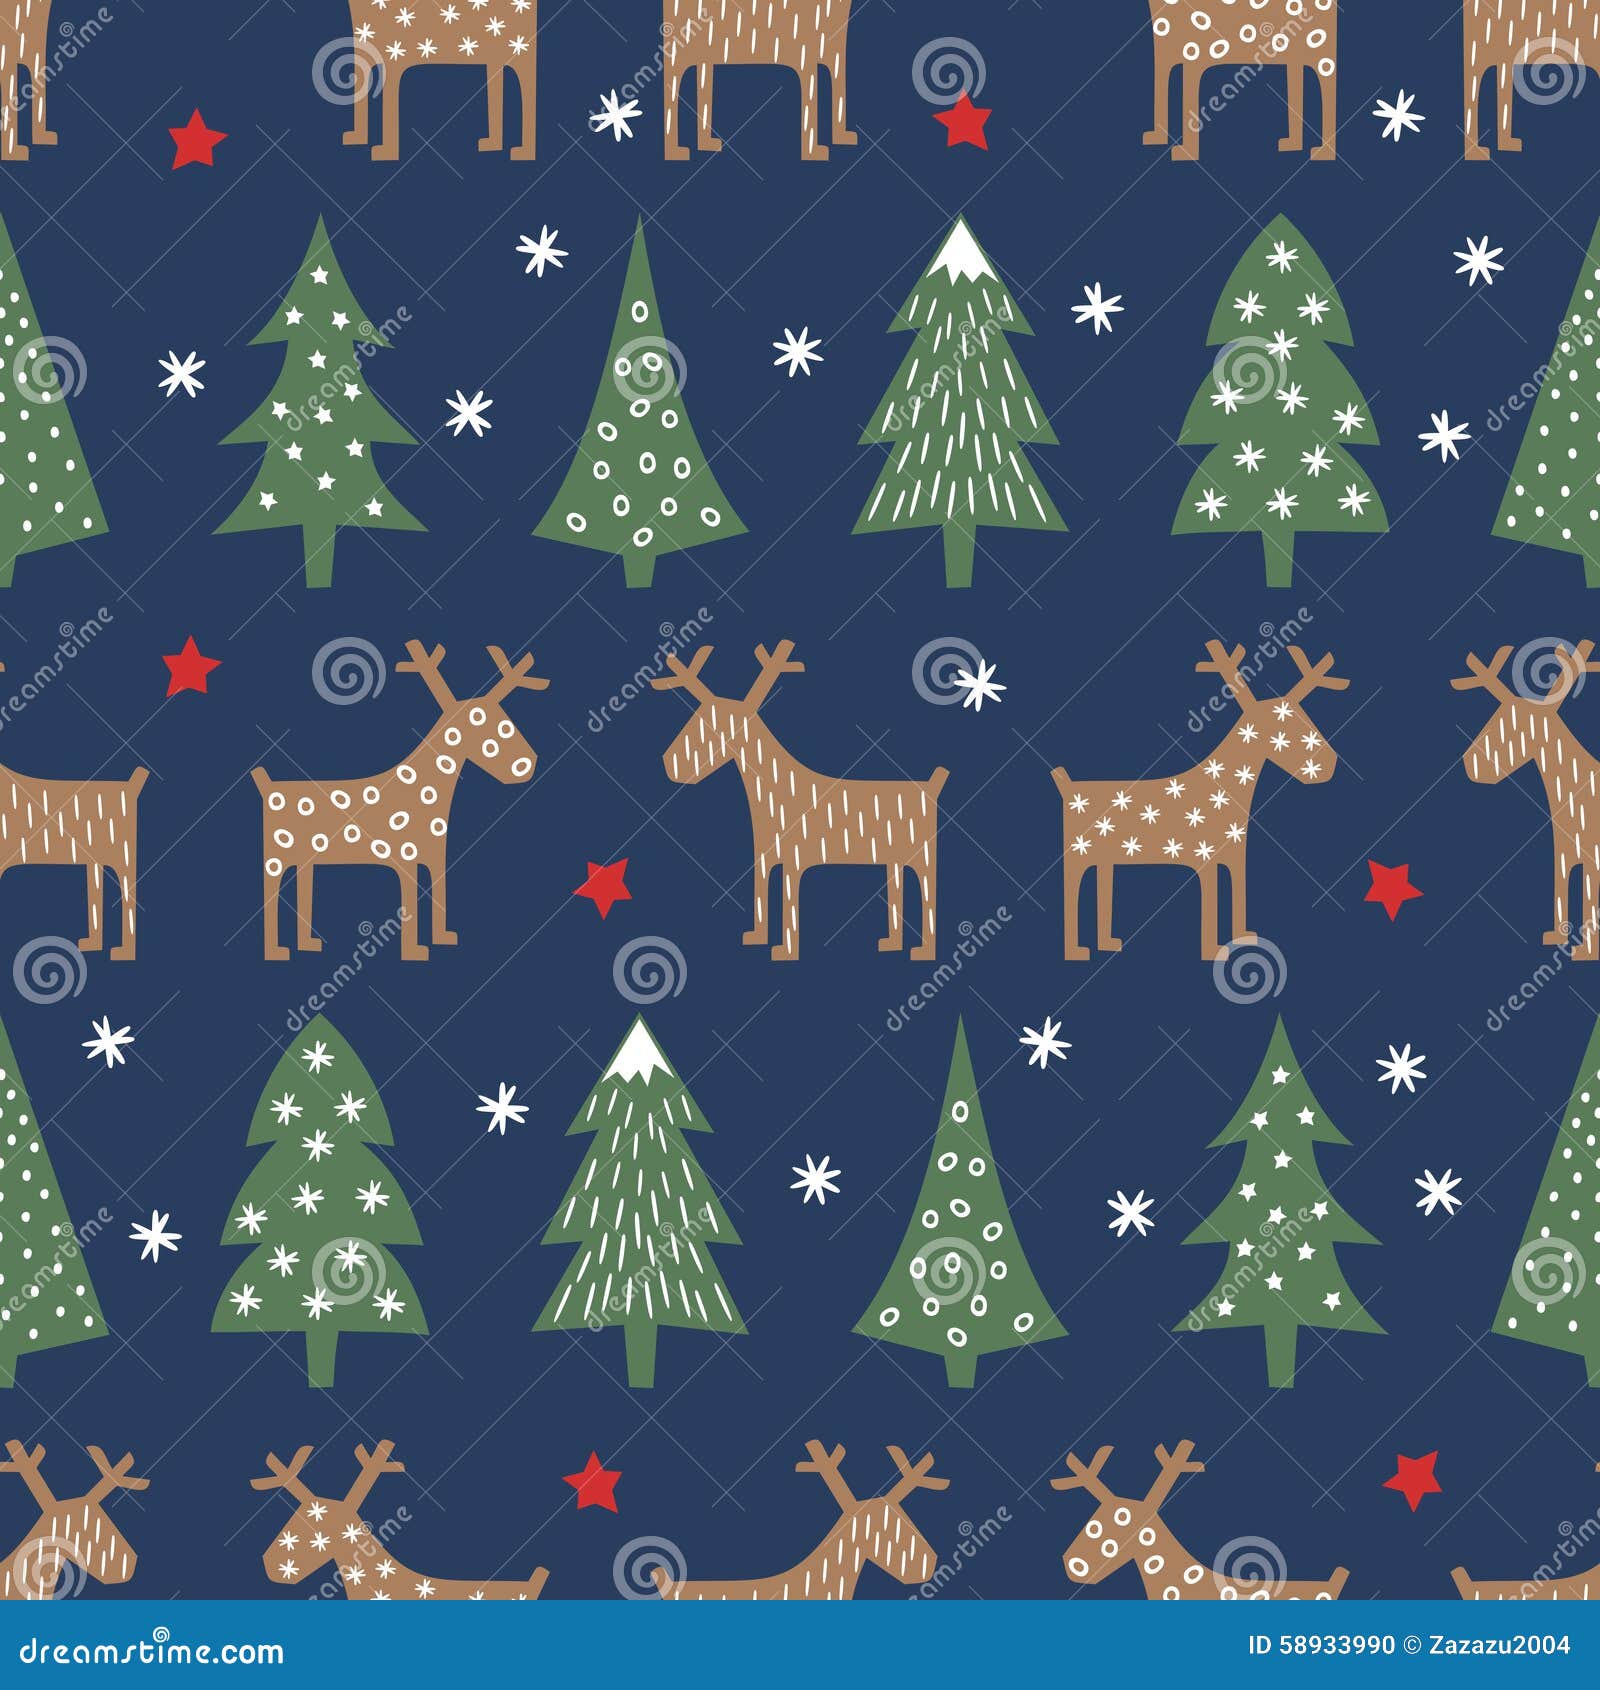 seamless christmas pattern - varied xmas trees, deer, stars and snowflakes.